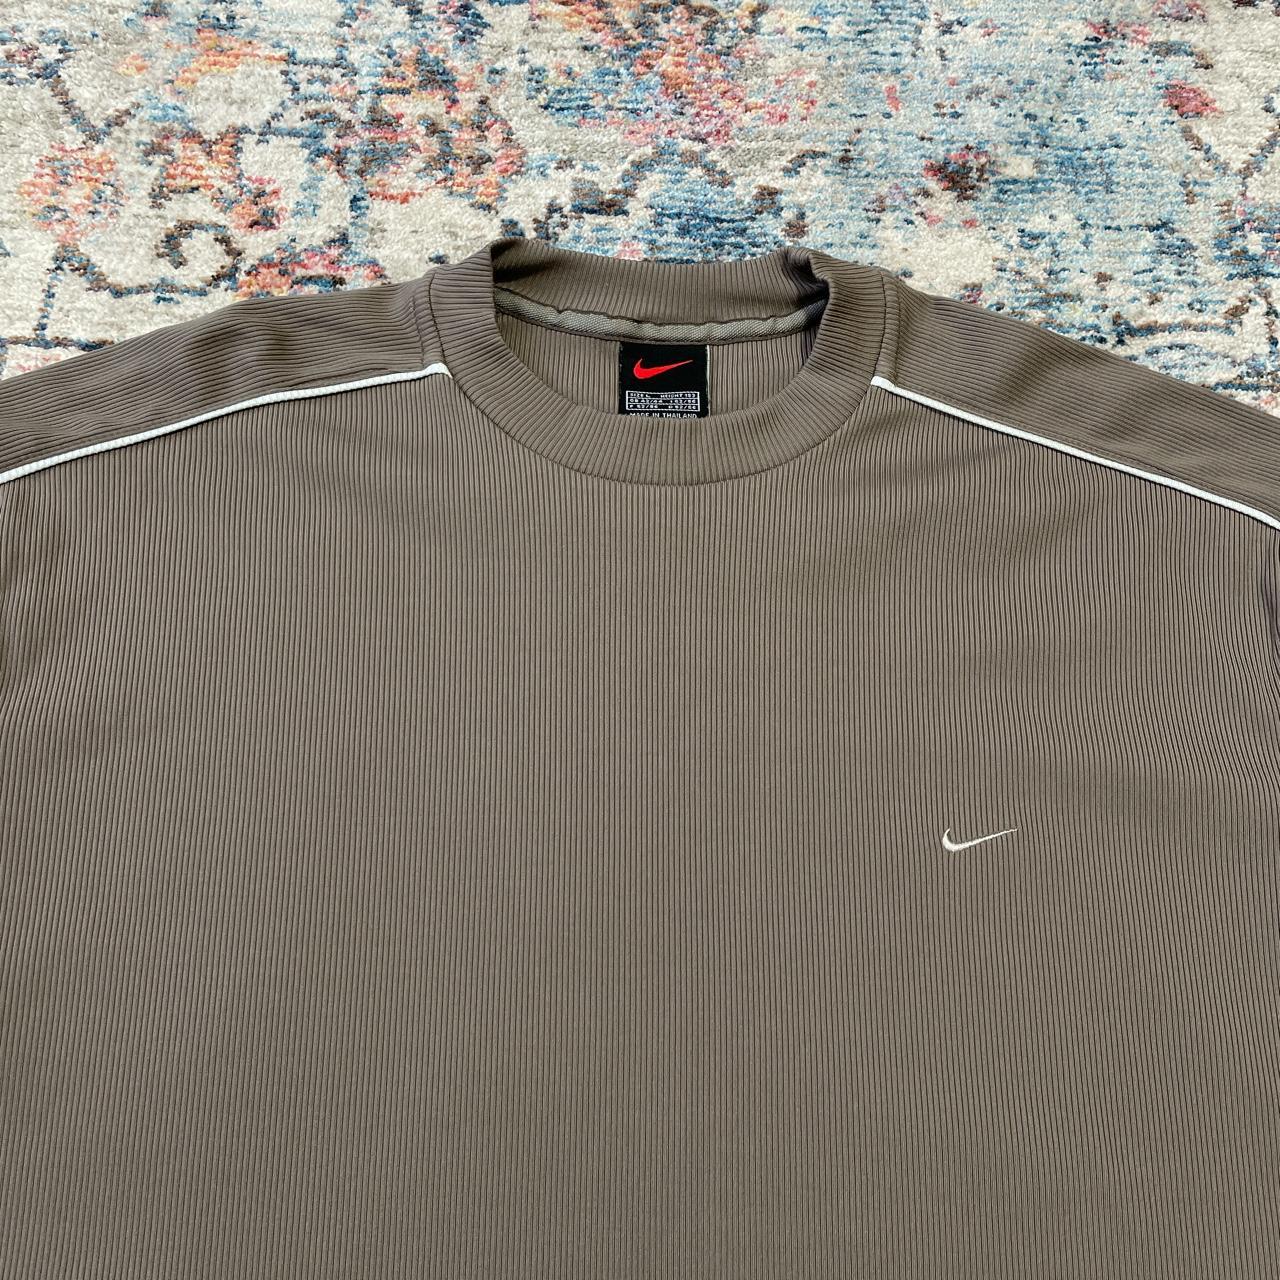 Nike Corduroy Light Brown T-Shirt